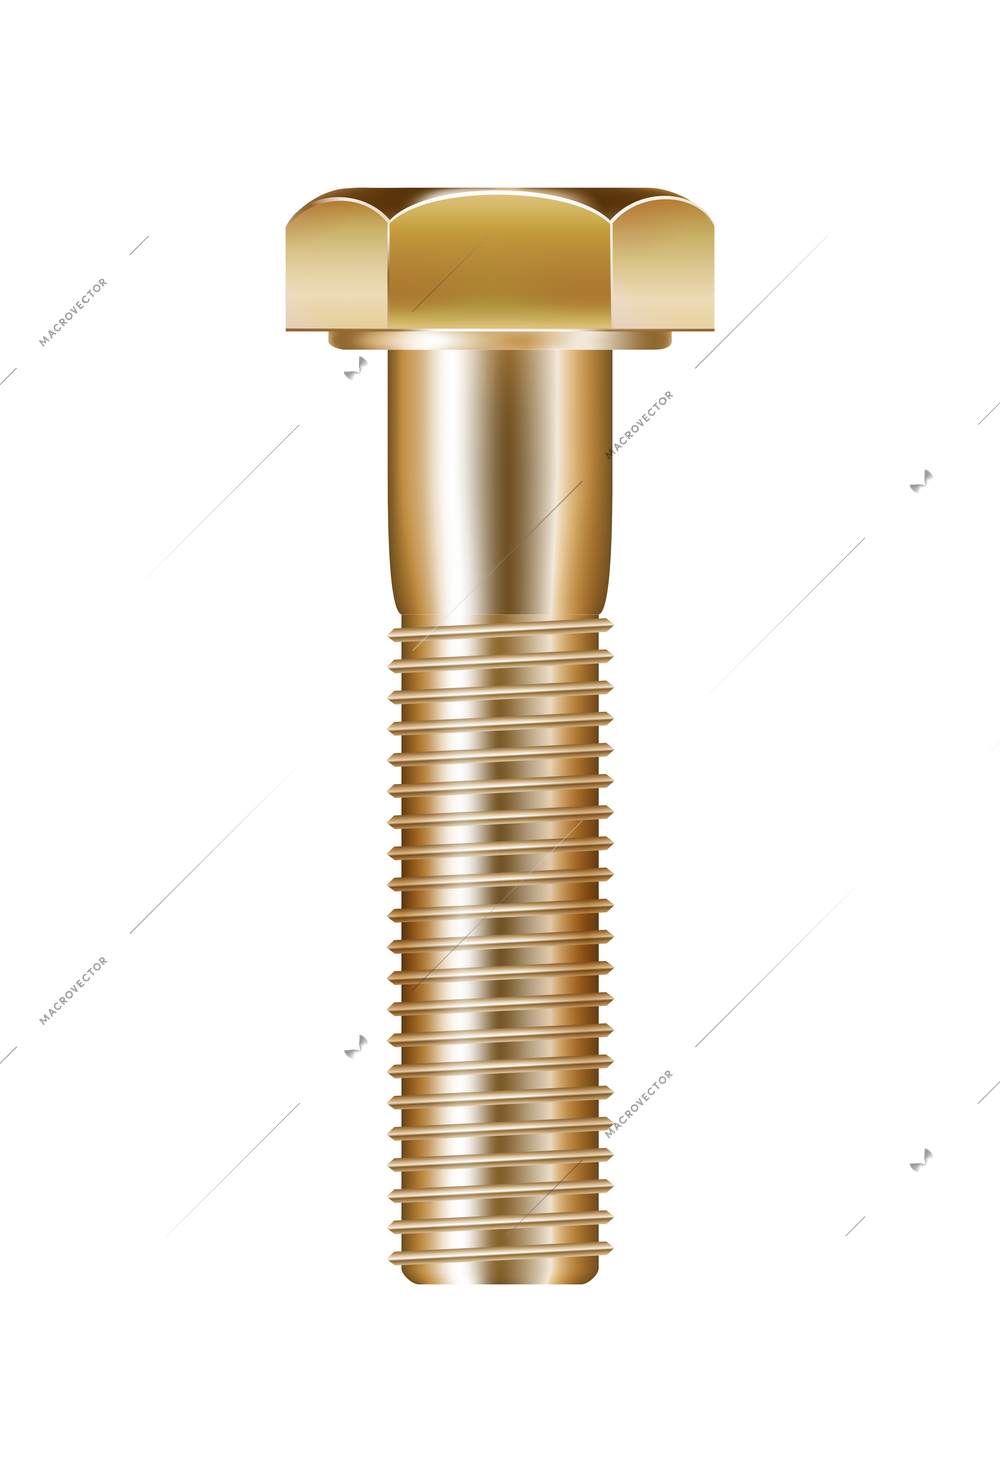 Realistic shiny golden screw bolt vector illustration